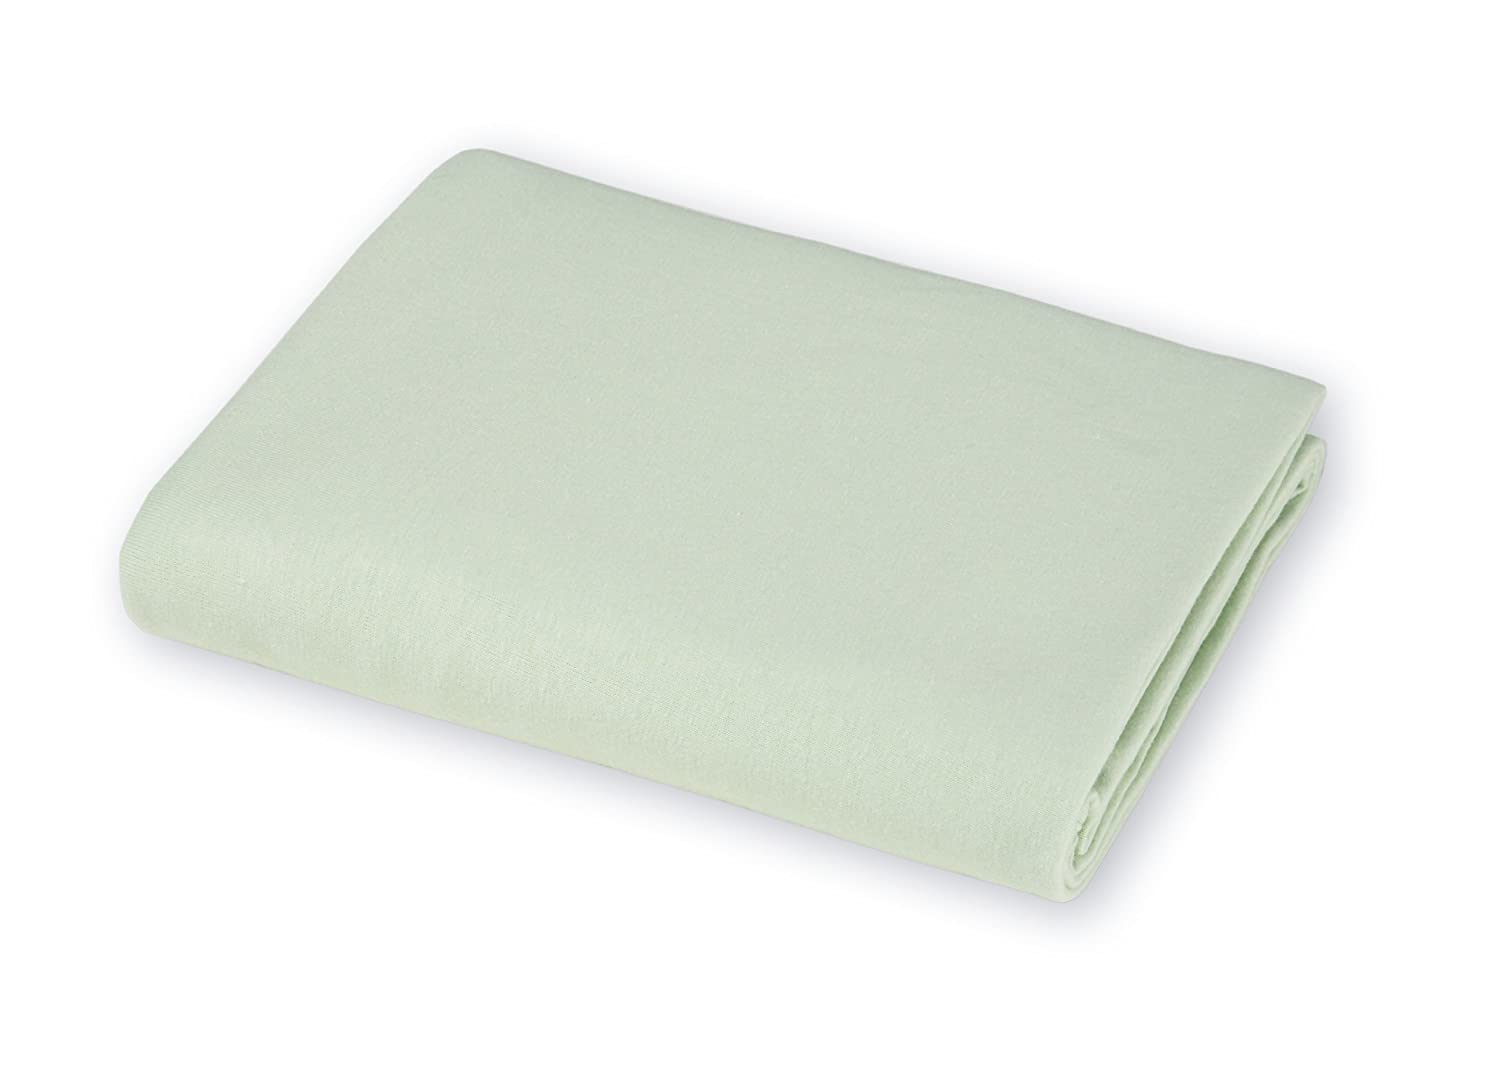 Stella 100% Cotton Ranforce King Size Fitted Sheet 180x200 cm Light Green